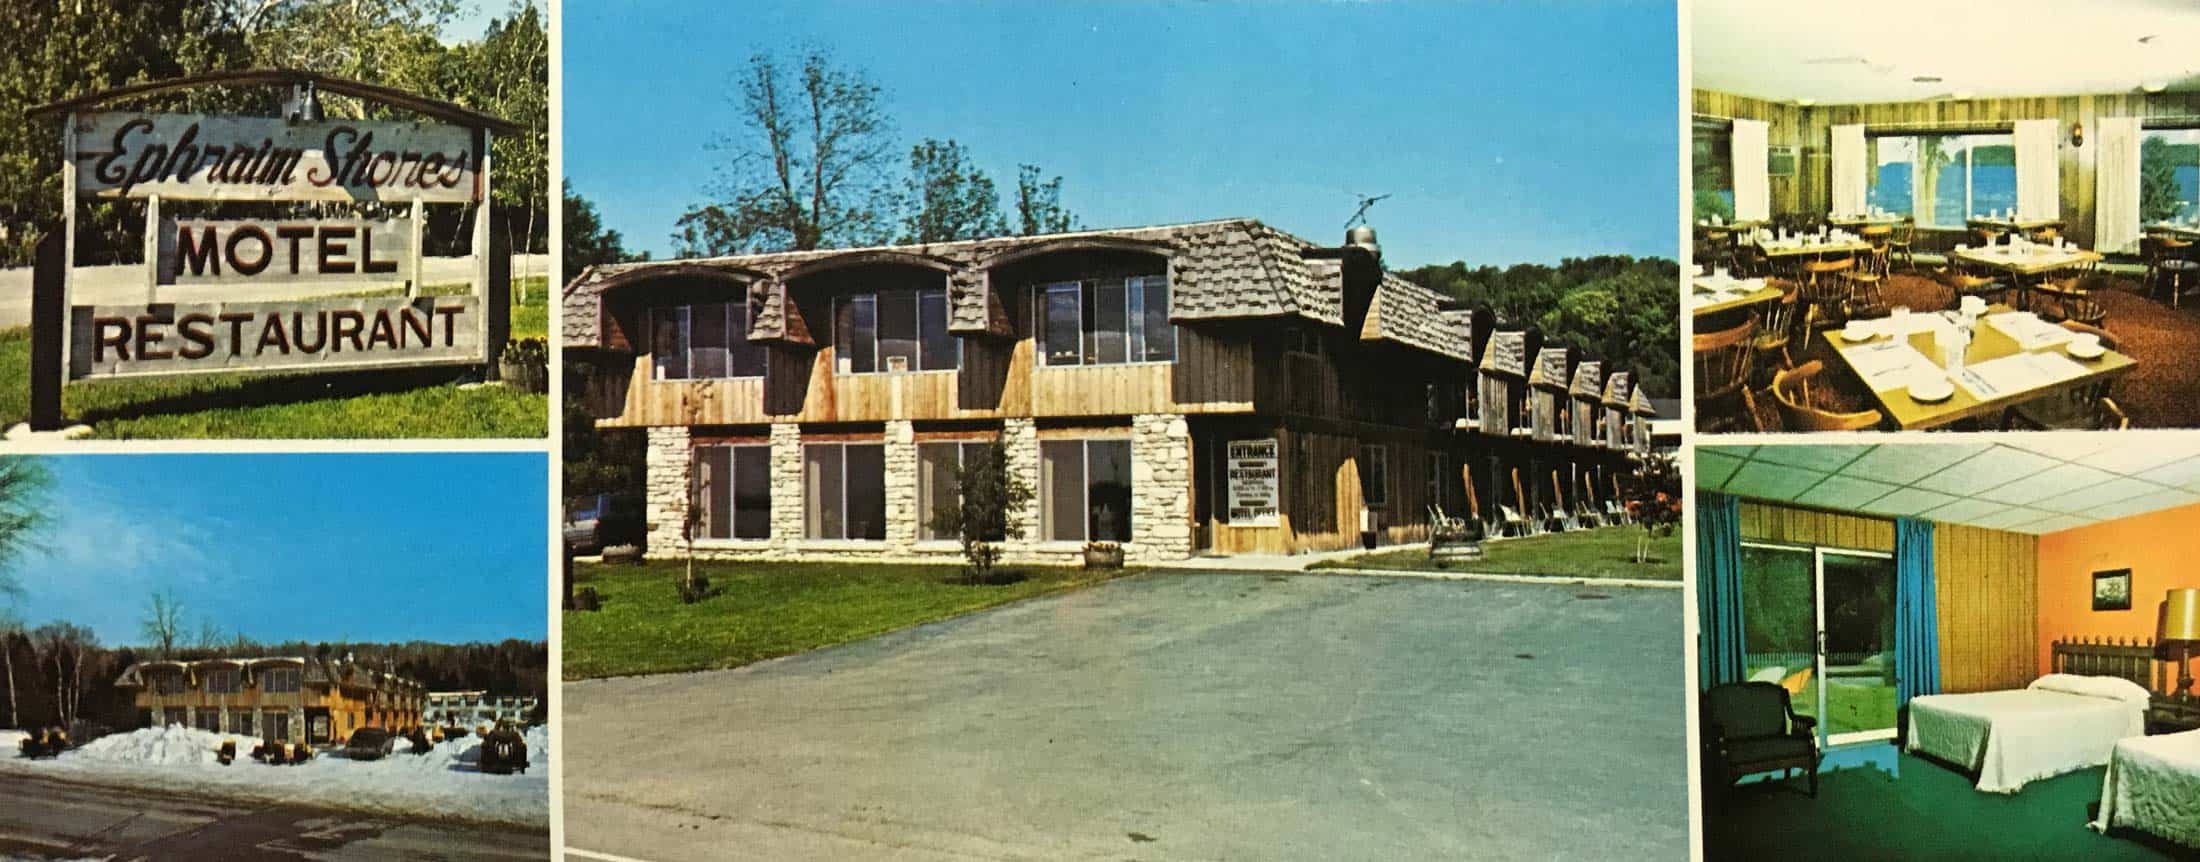 Historical photo of Ephraim Shores Resort